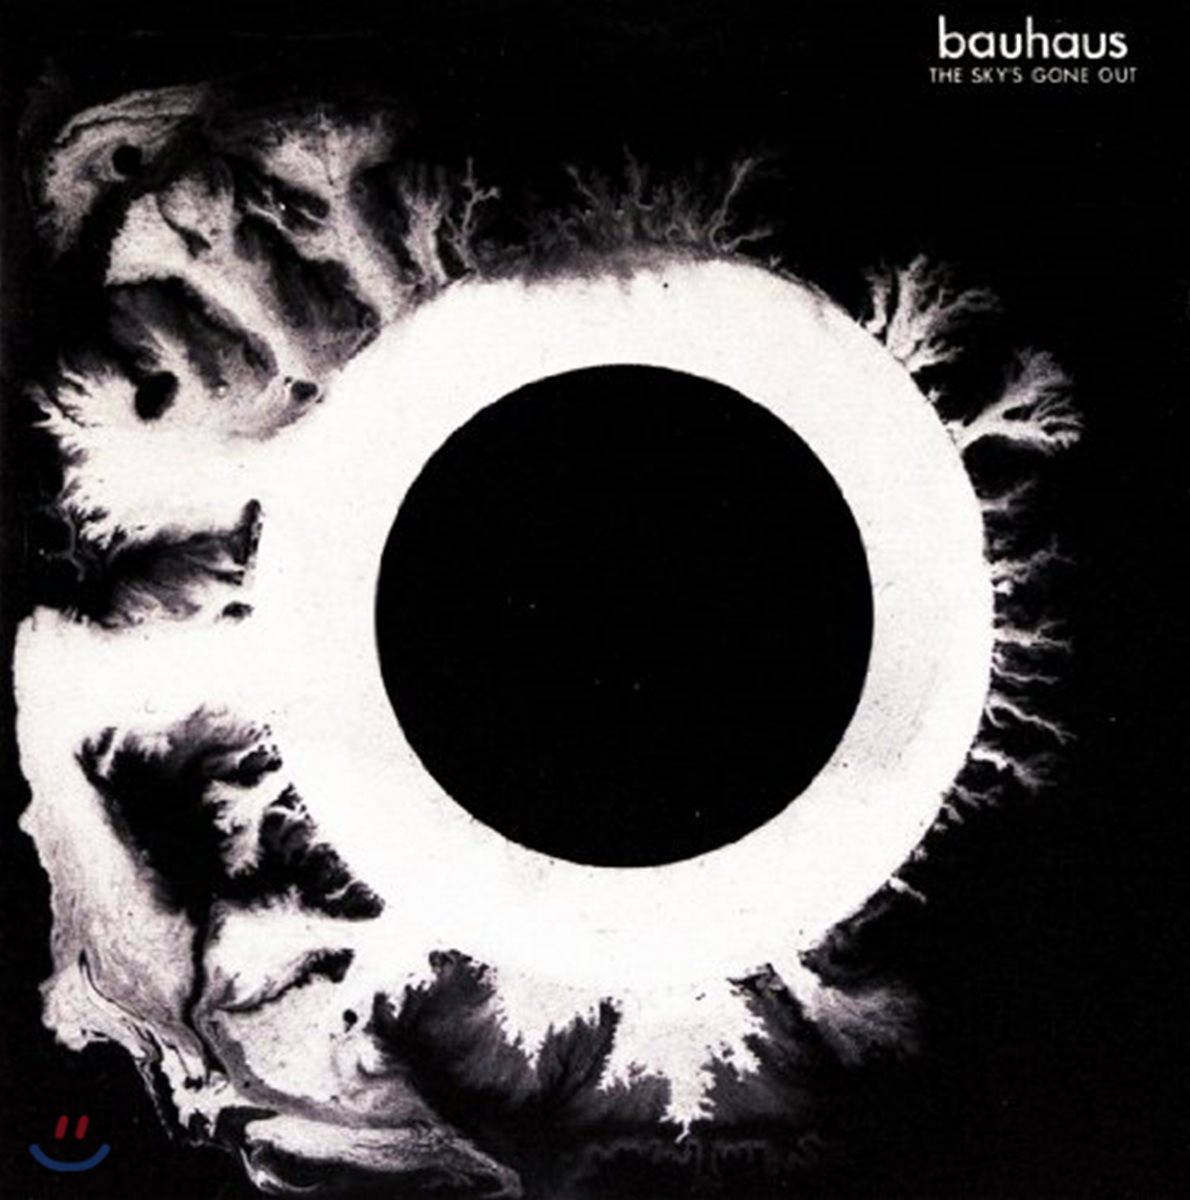 Bauhaus (바우하우스) - The Sky's Gone Out [LP]